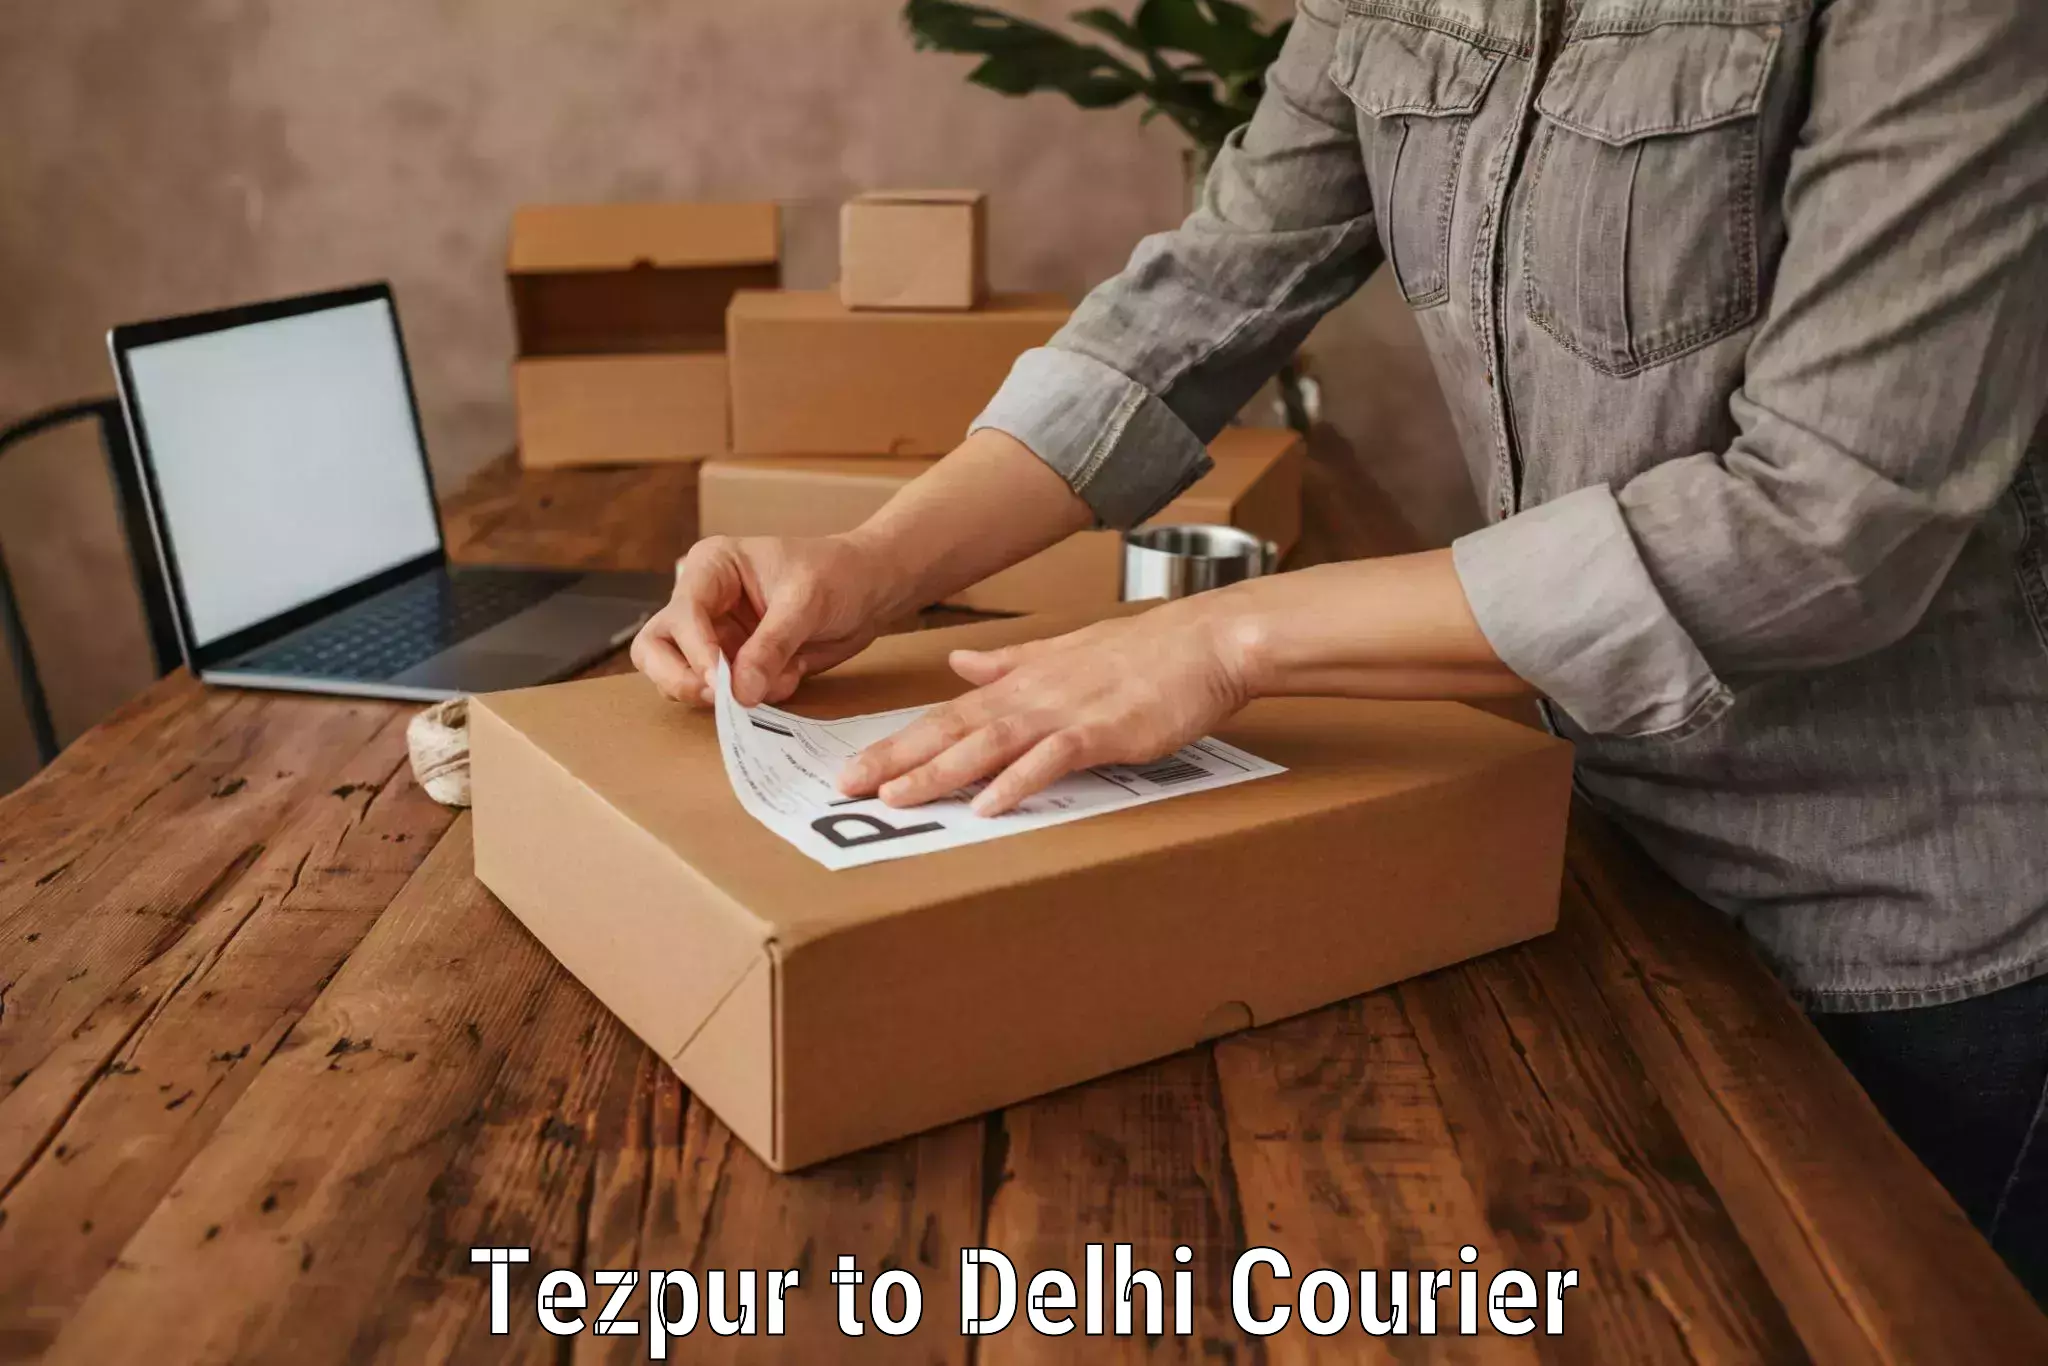 Same day luggage service Tezpur to East Delhi